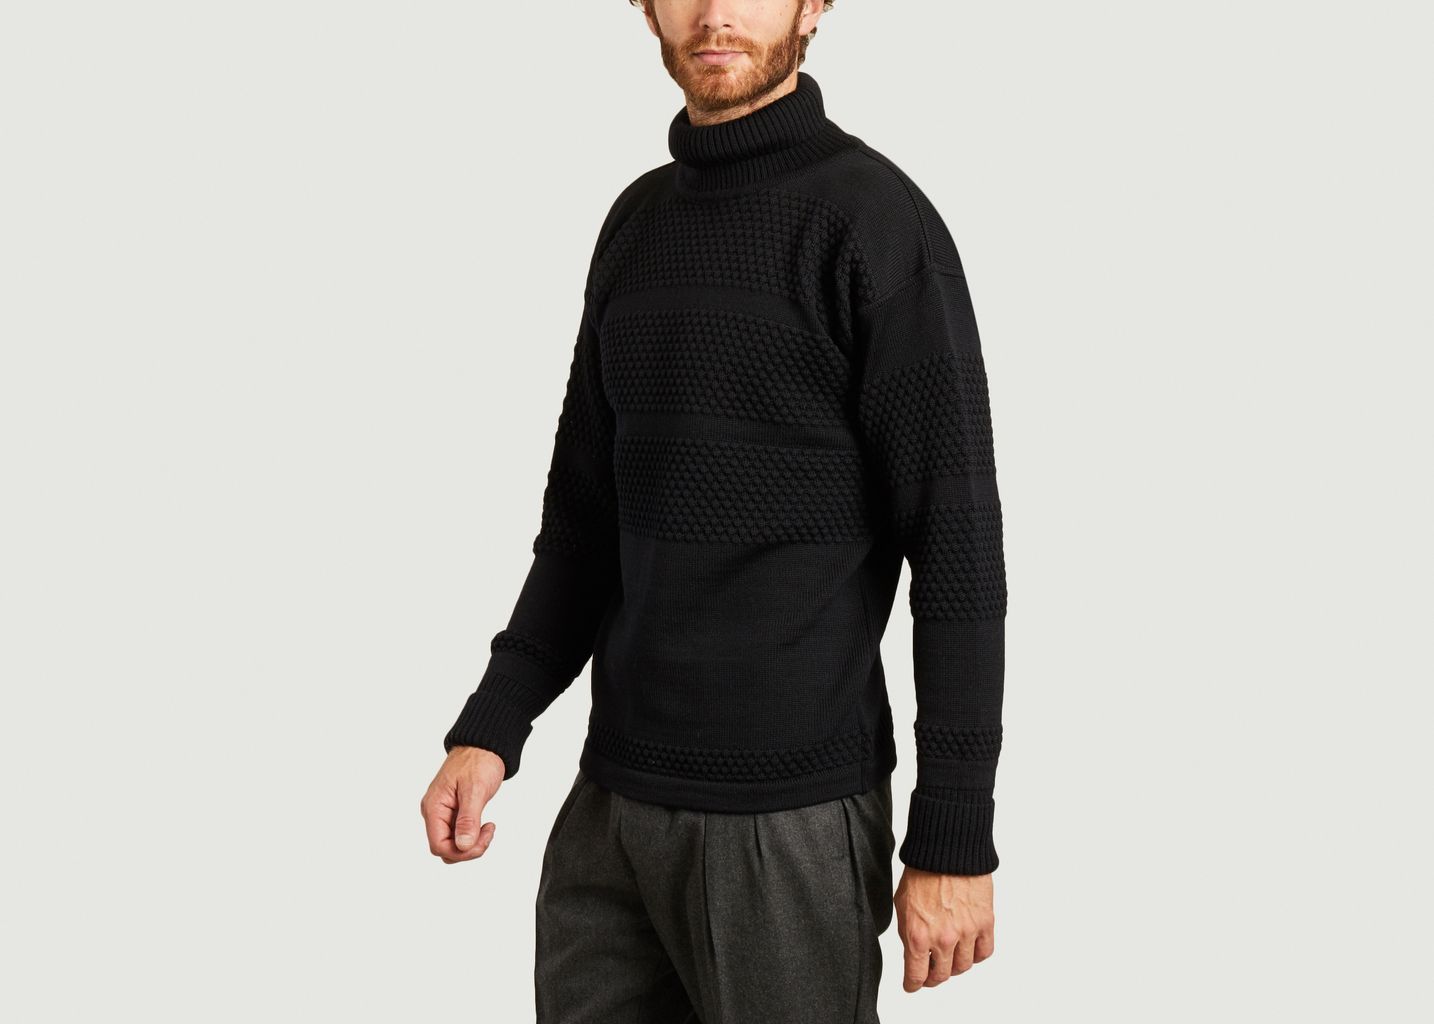 S.N.S Mens Clothing Sweaters and knitwear Turtlenecks Herning Wool Fisherman Turtleneck Sweater Natural for Men 